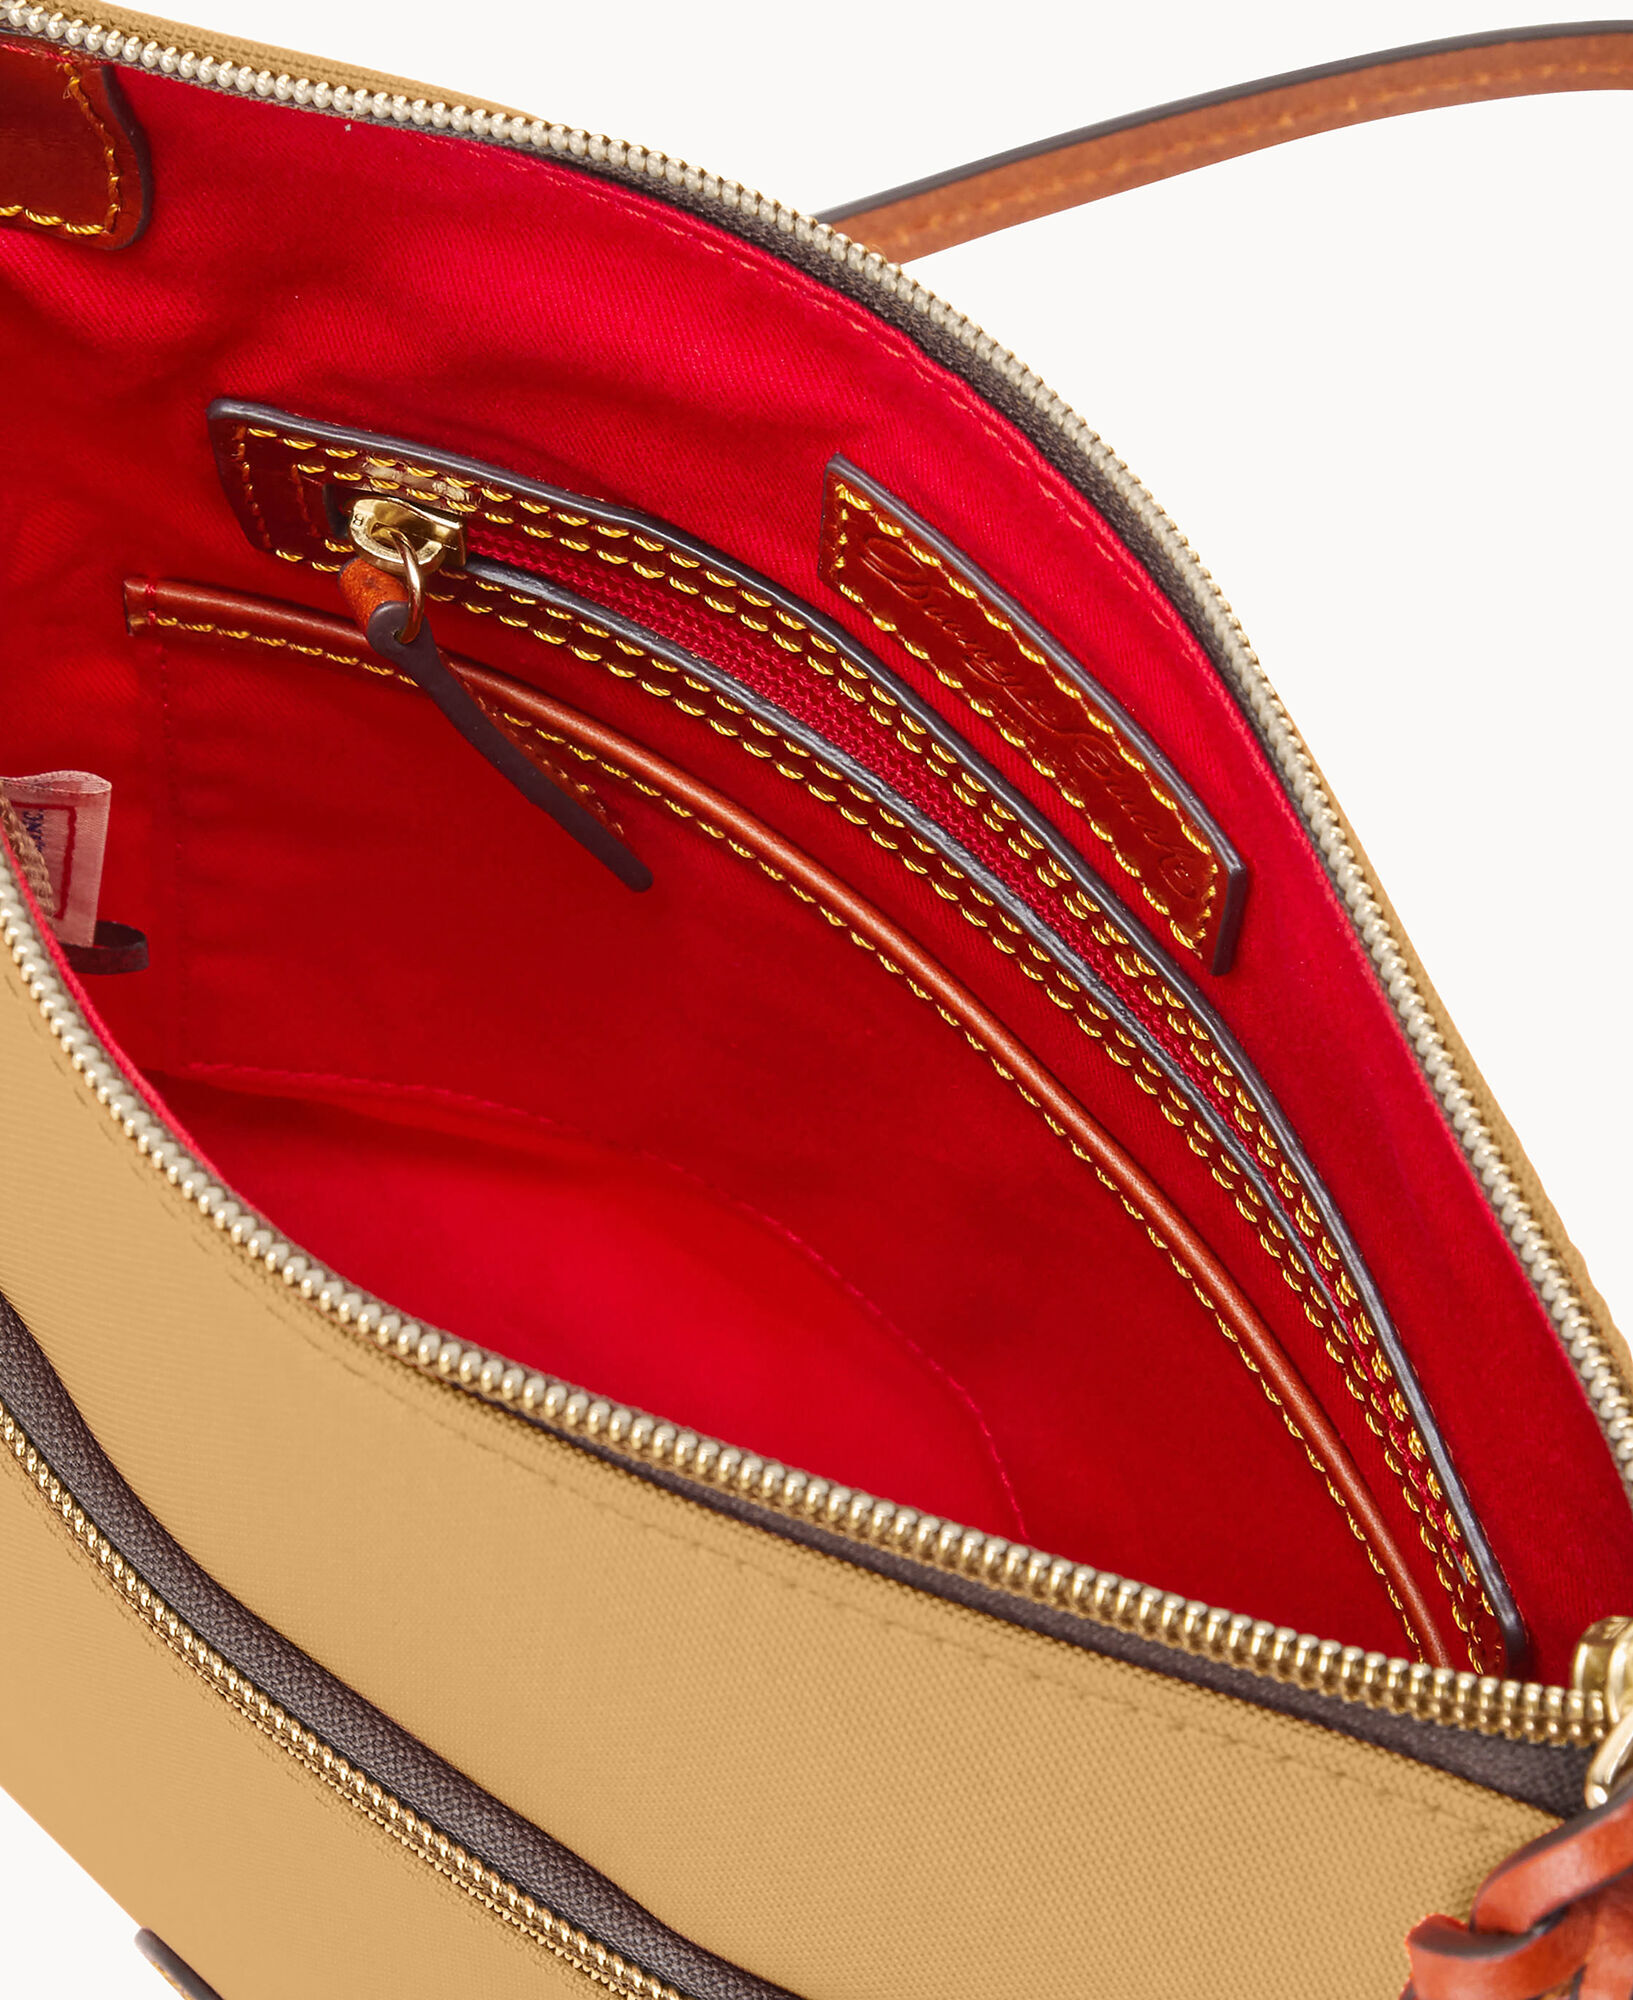 Dooney & Bourke Red Nylon Leather Trim Tote - Women's handbags